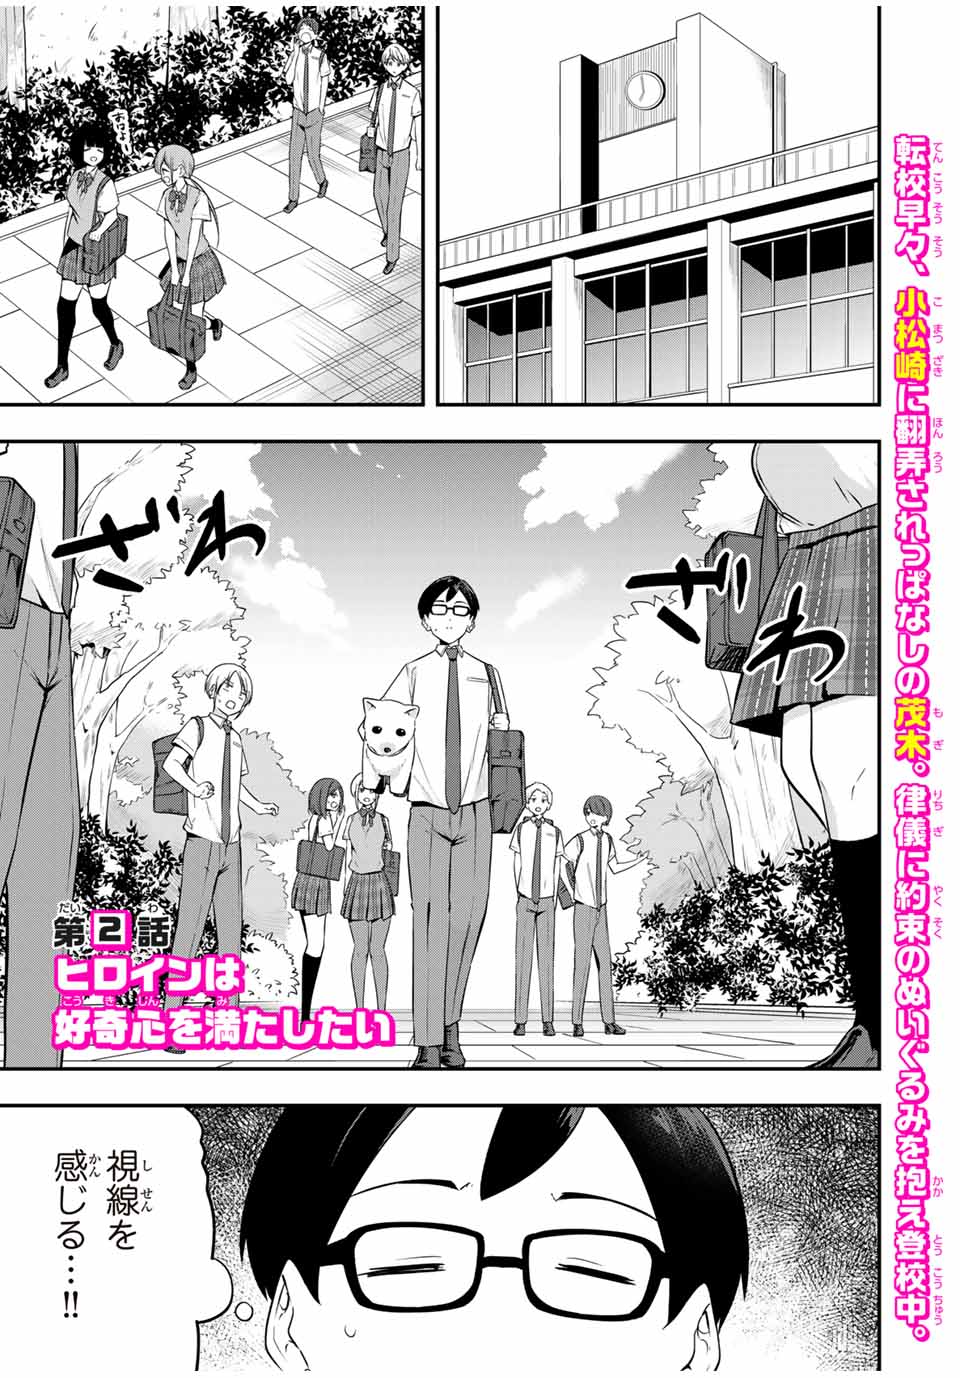 Heroine wa xx Okasegitai - Chapter 2 - Page 1